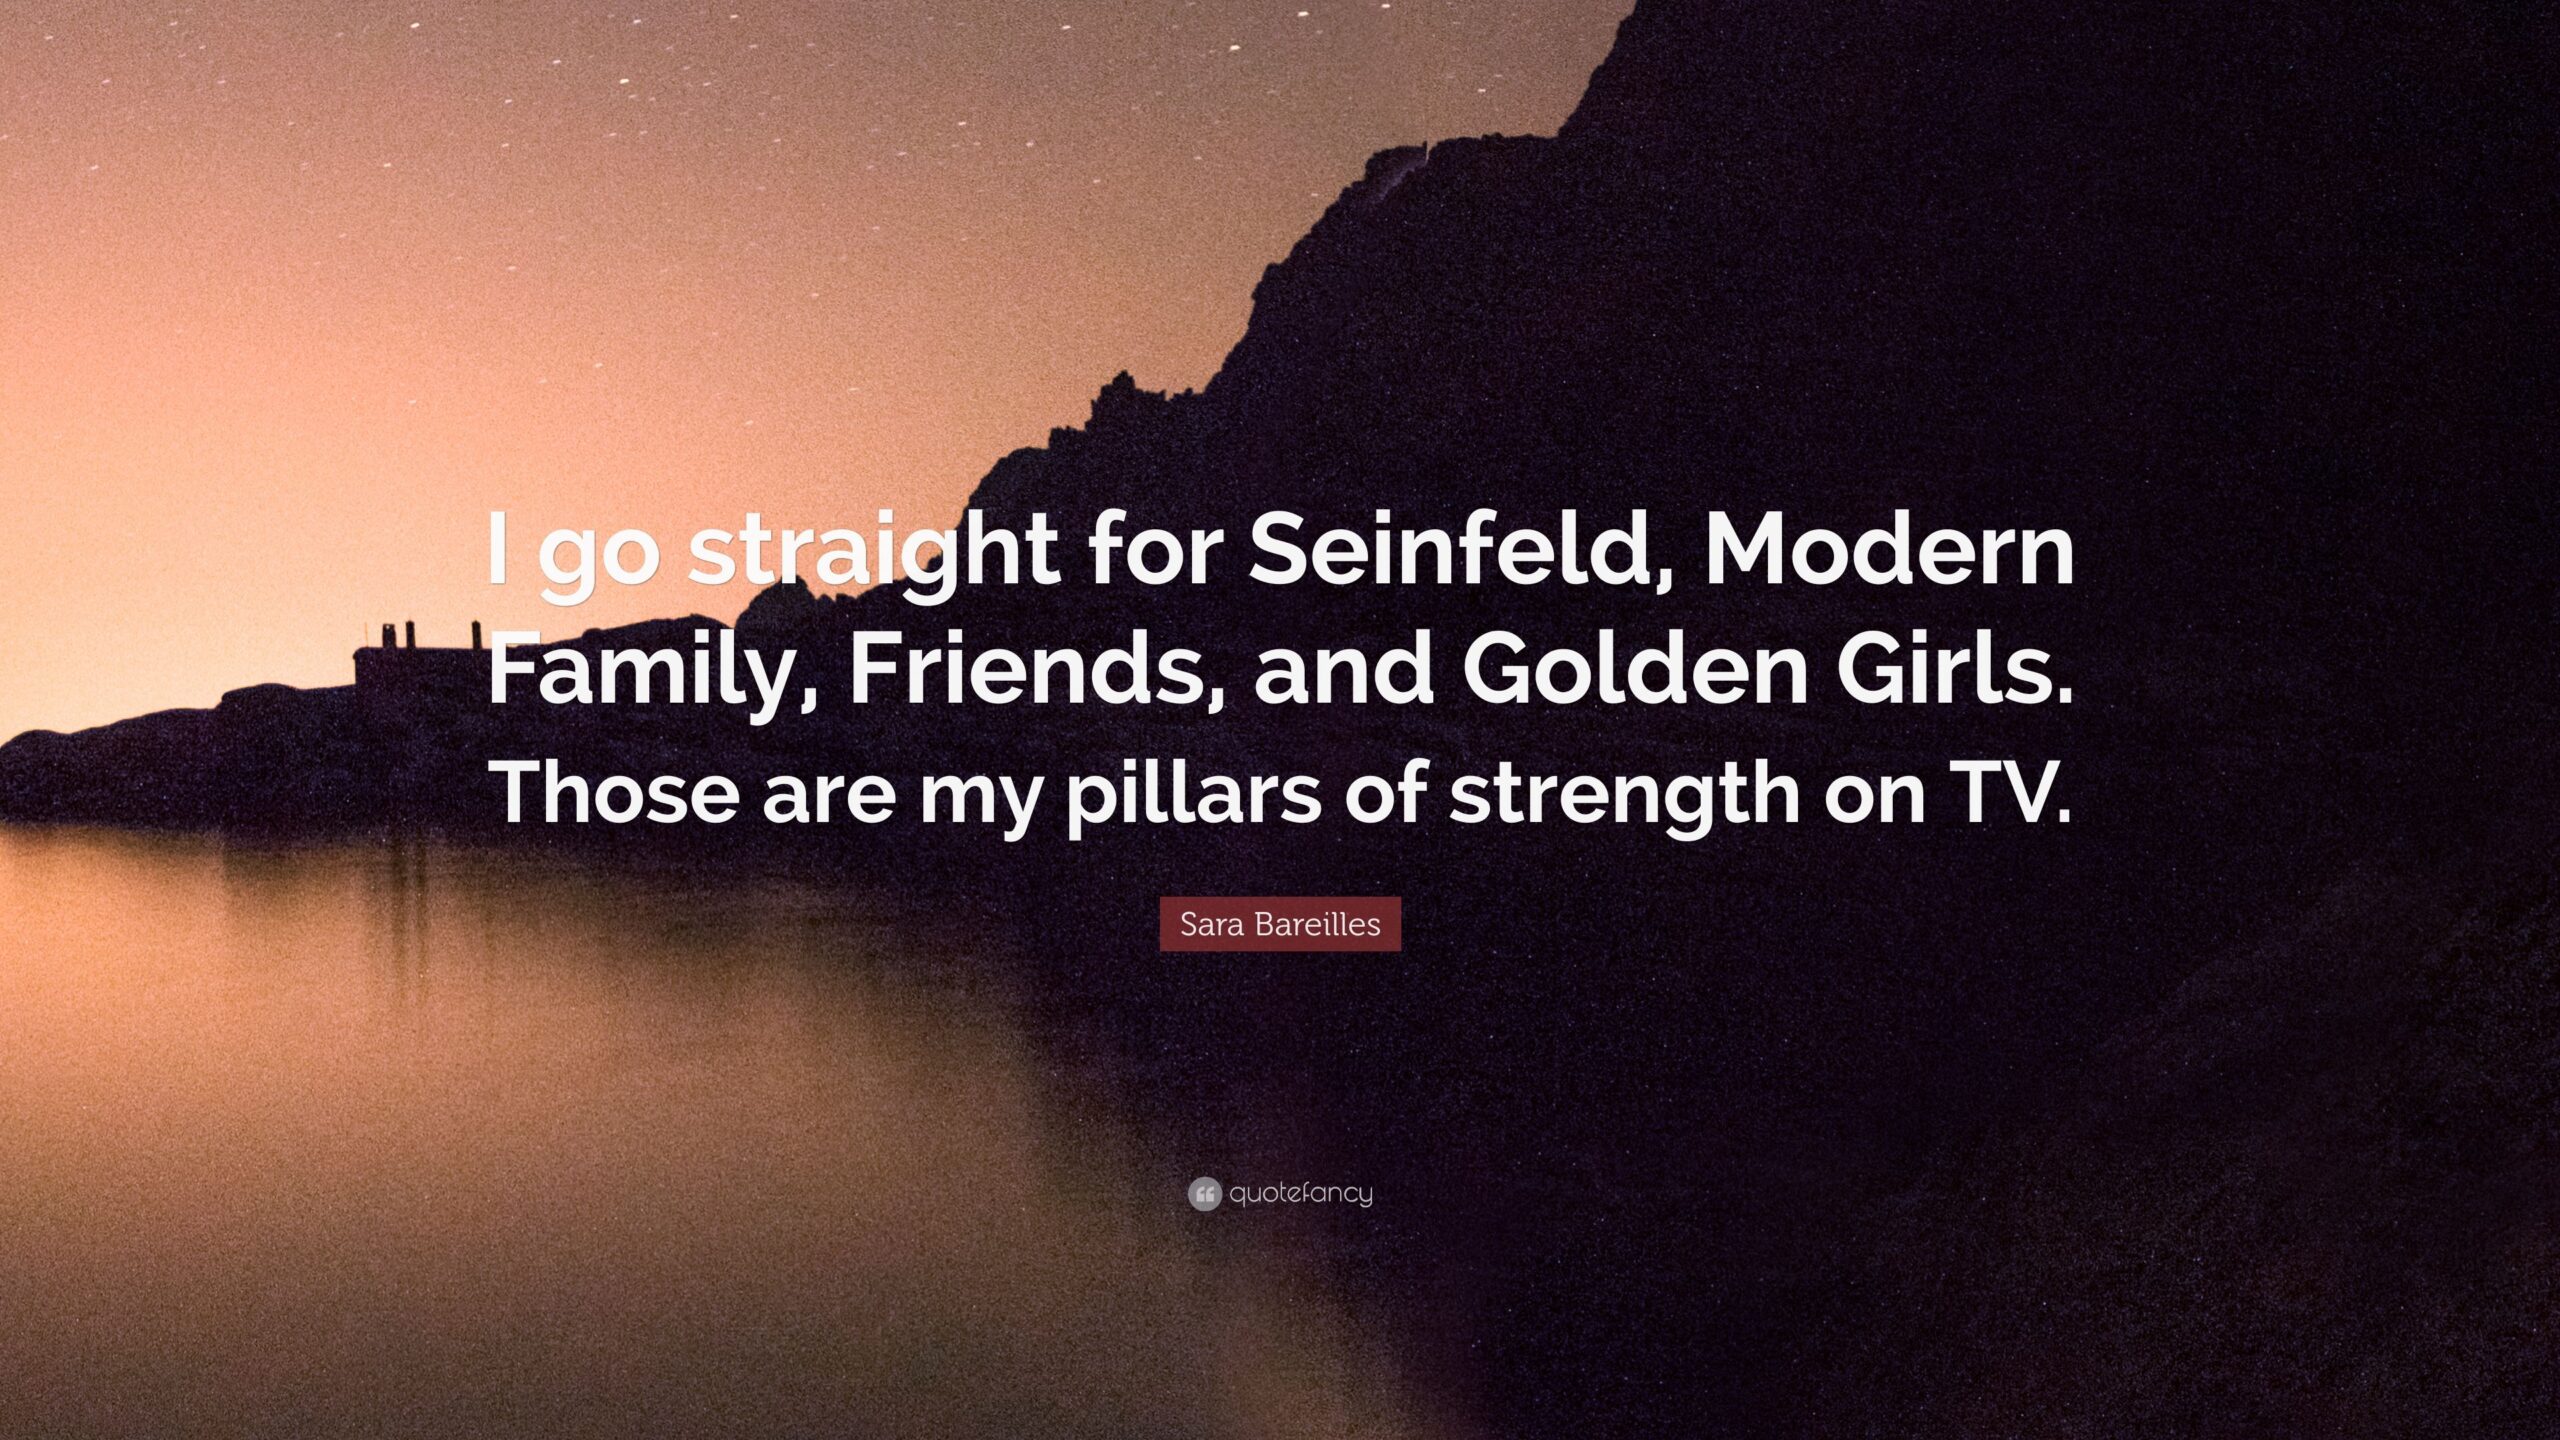 Sara Bareilles Quote “I go straight for Seinfeld, Modern Family